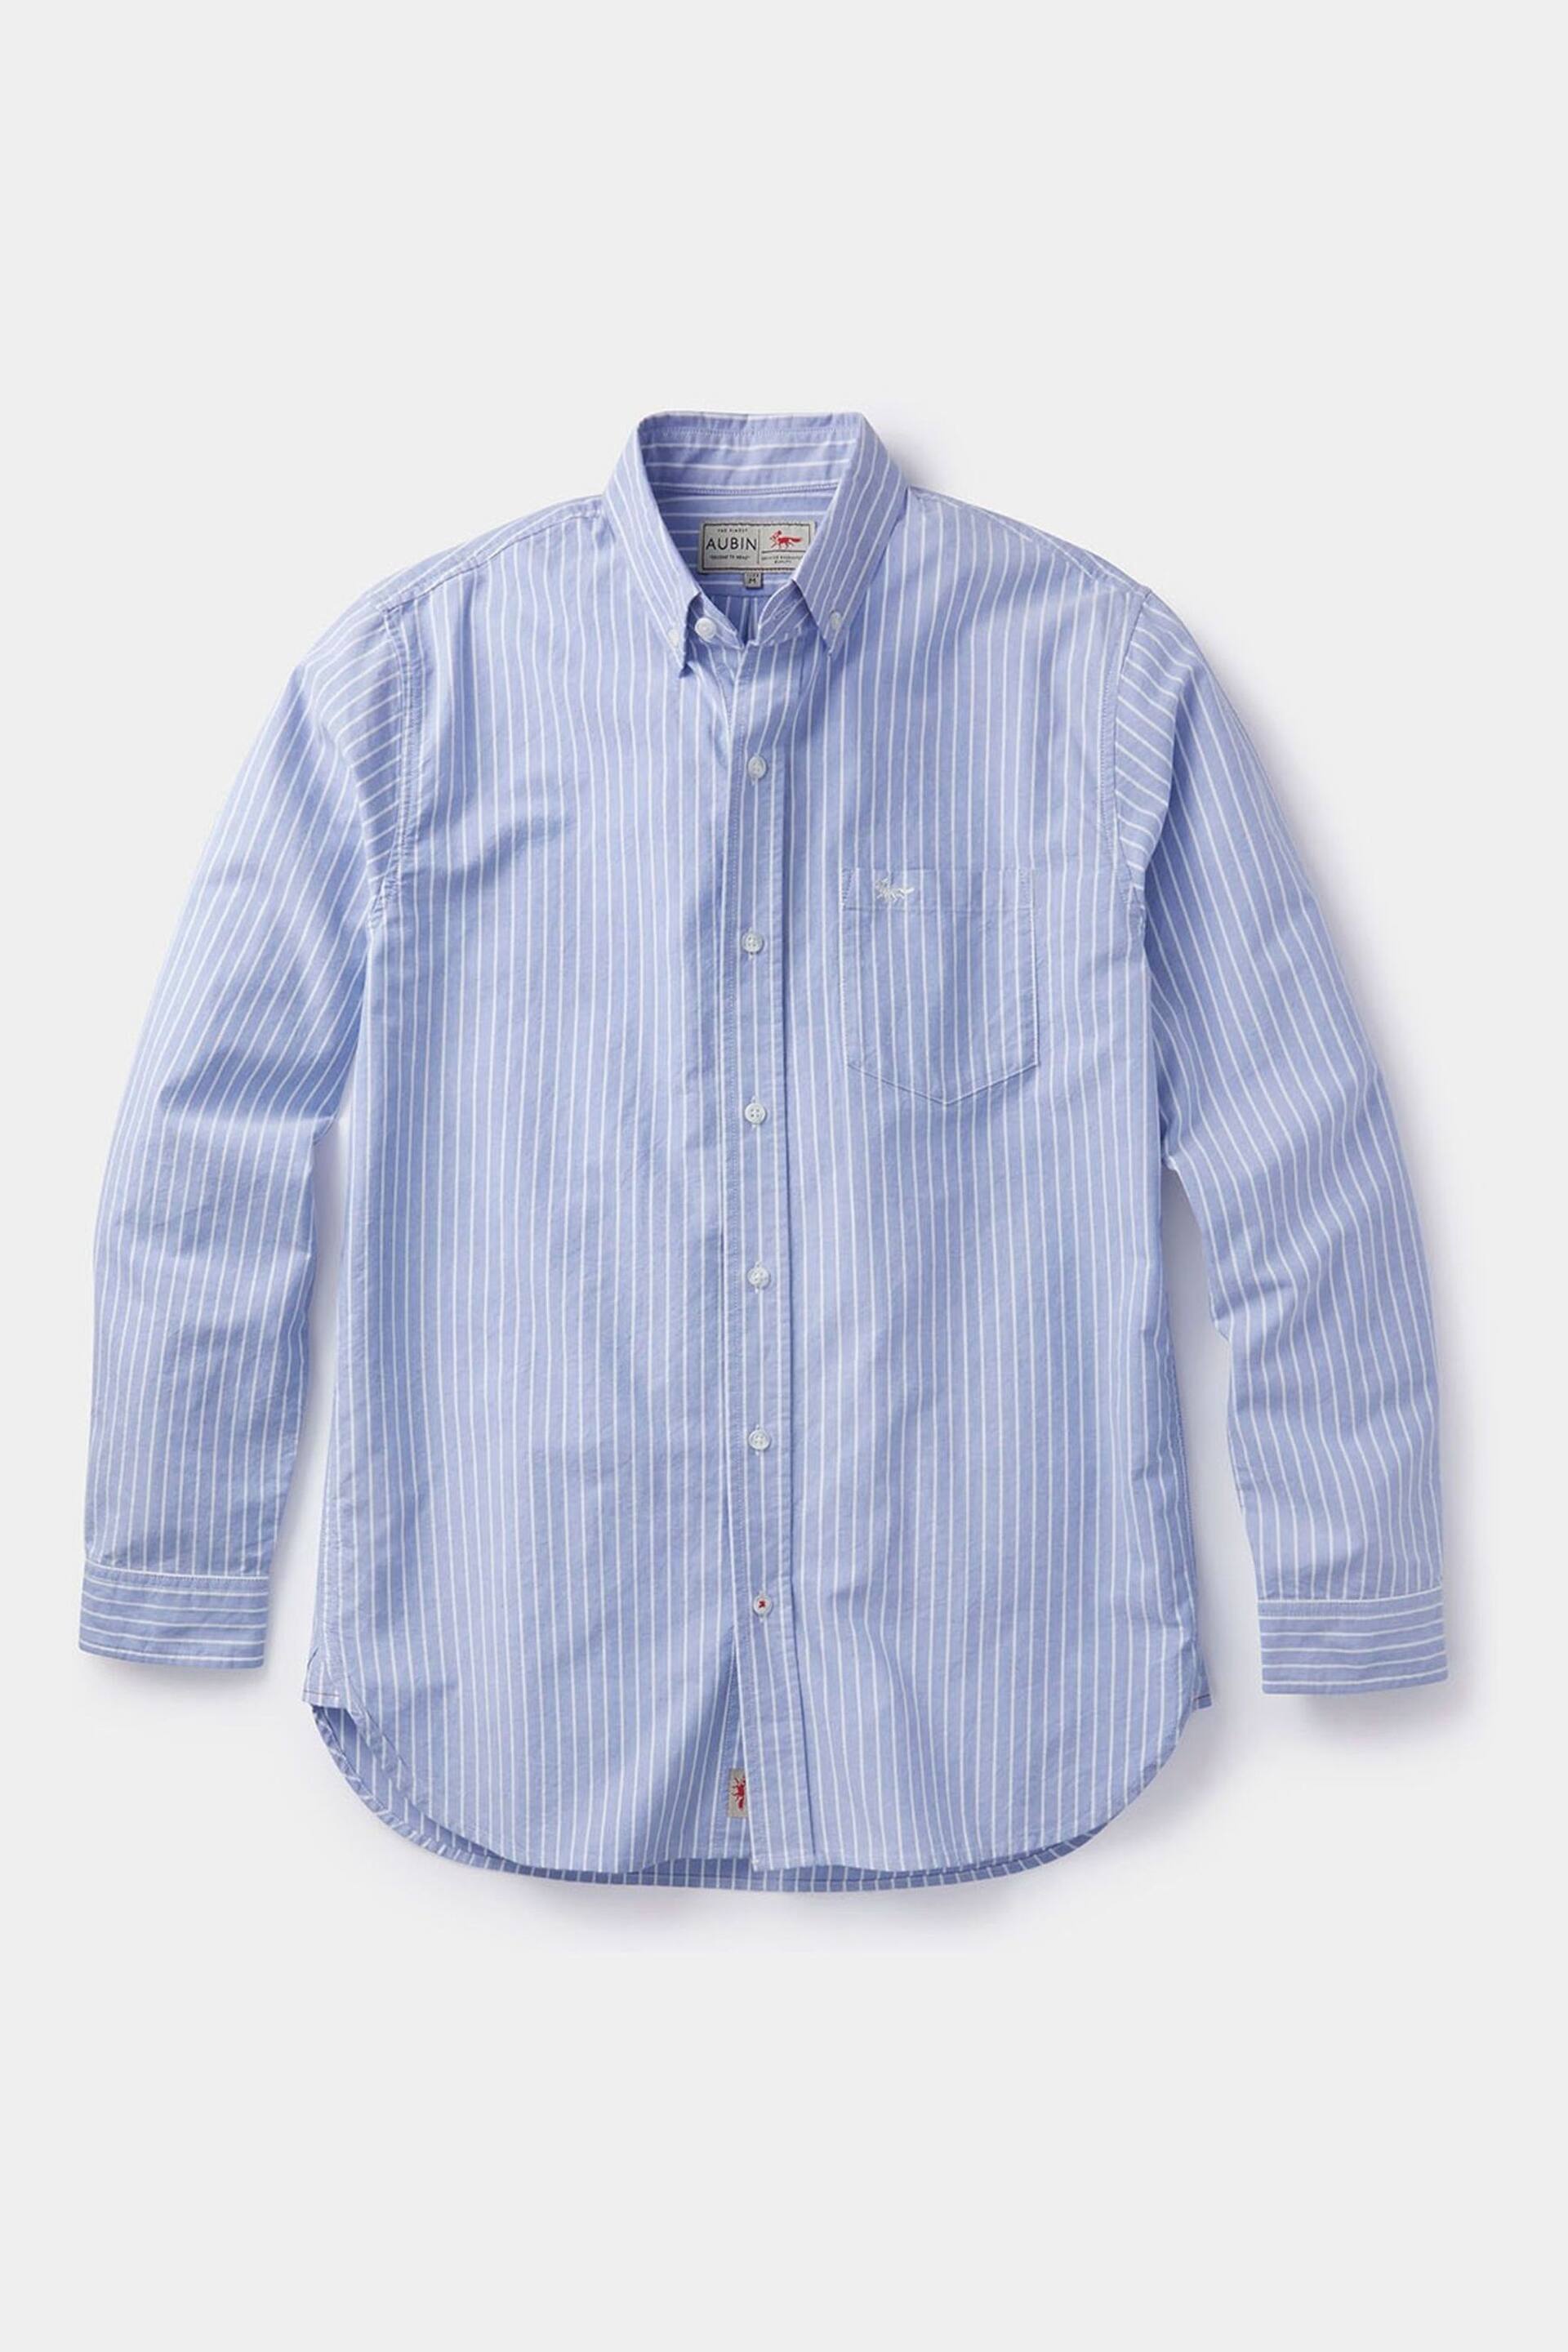 Aubin Aldridge Oxford Button Down Shirt - Image 5 of 6